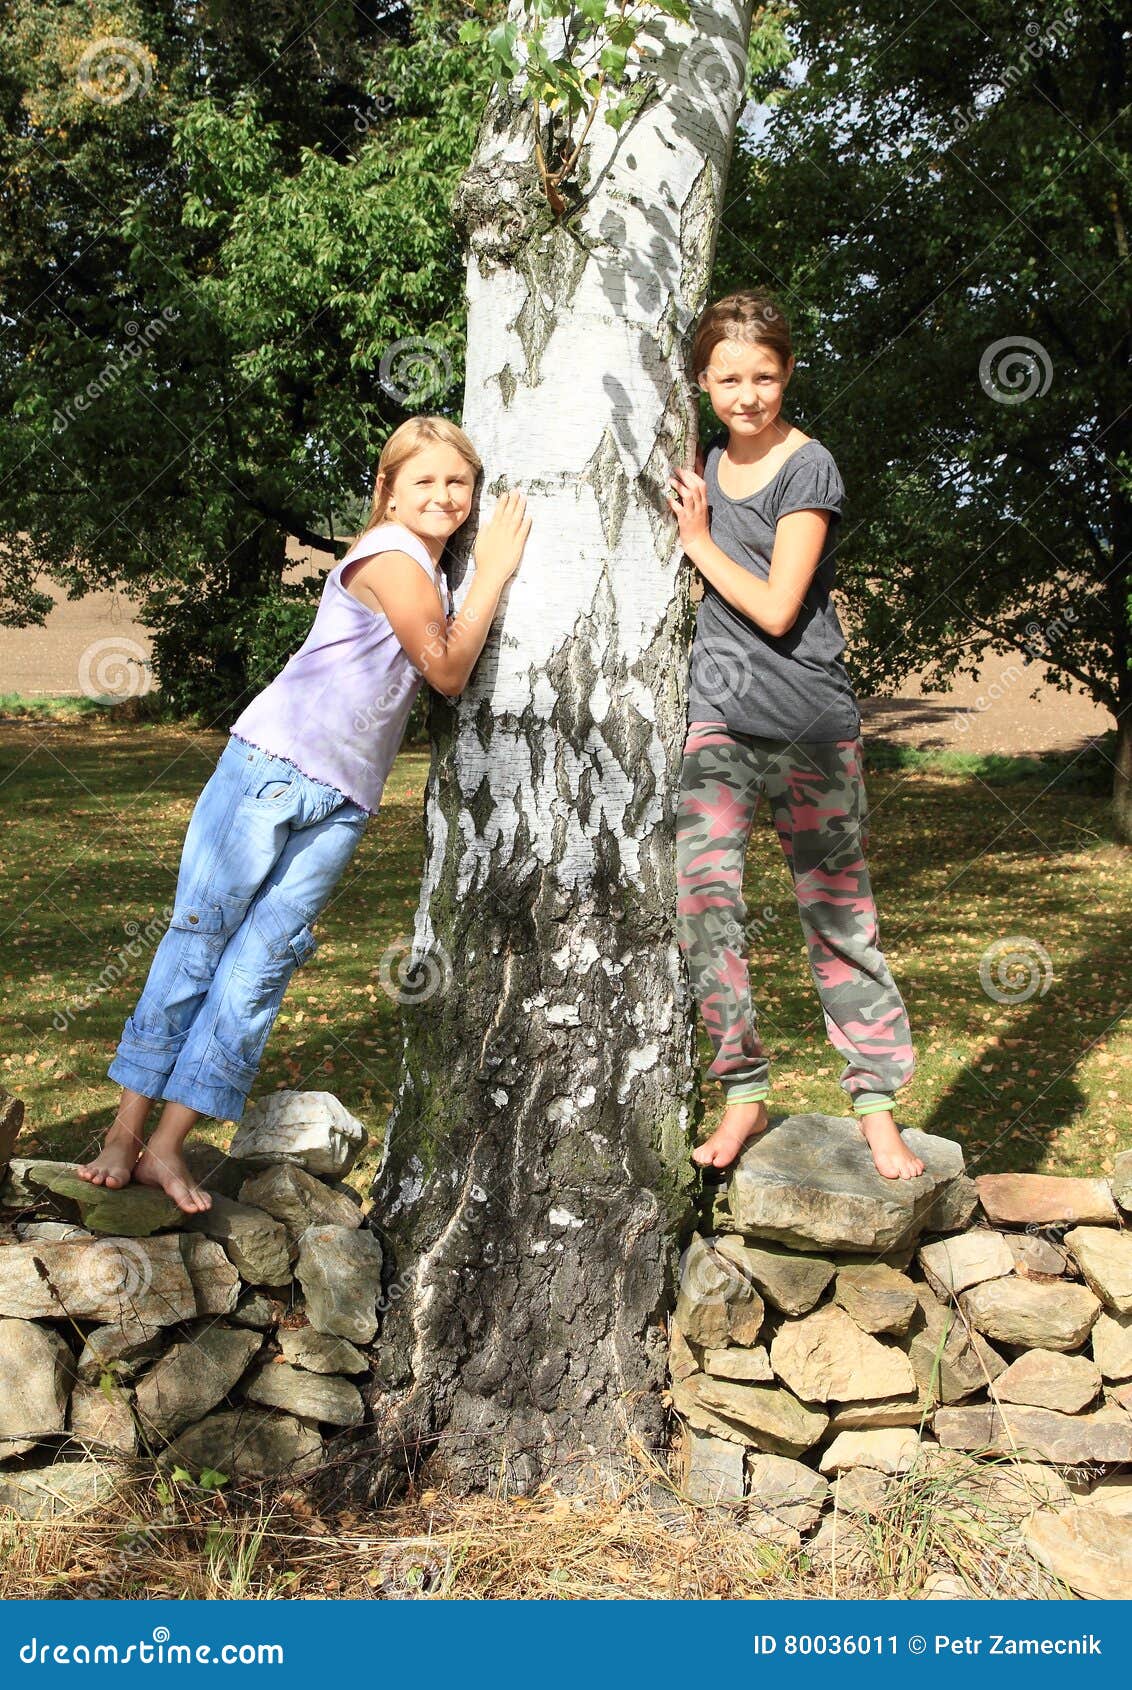 https://thumbs.dreamstime.com/z/little-girls-stone-wall-small-barefoot-kids-standing-leaning-trunk-birch-tree-80036011.jpg